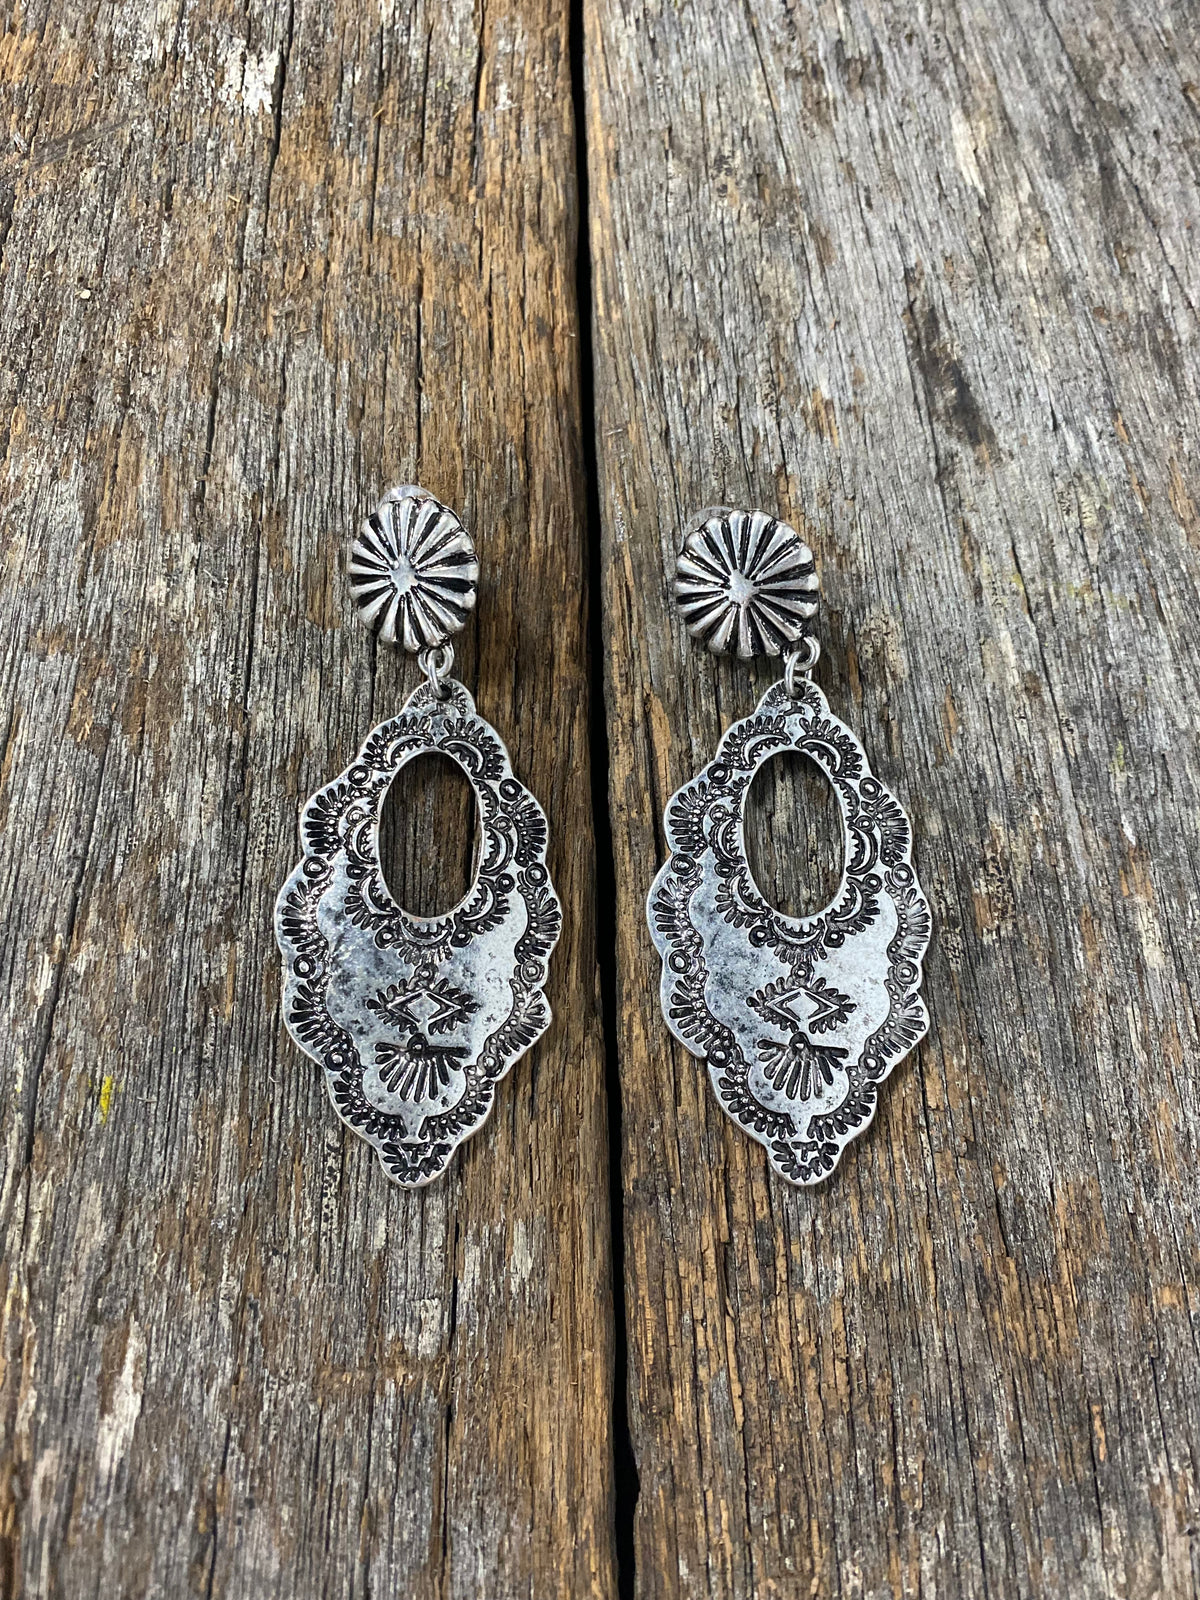 Western Earrings - Tipi Navajo Style Rustic